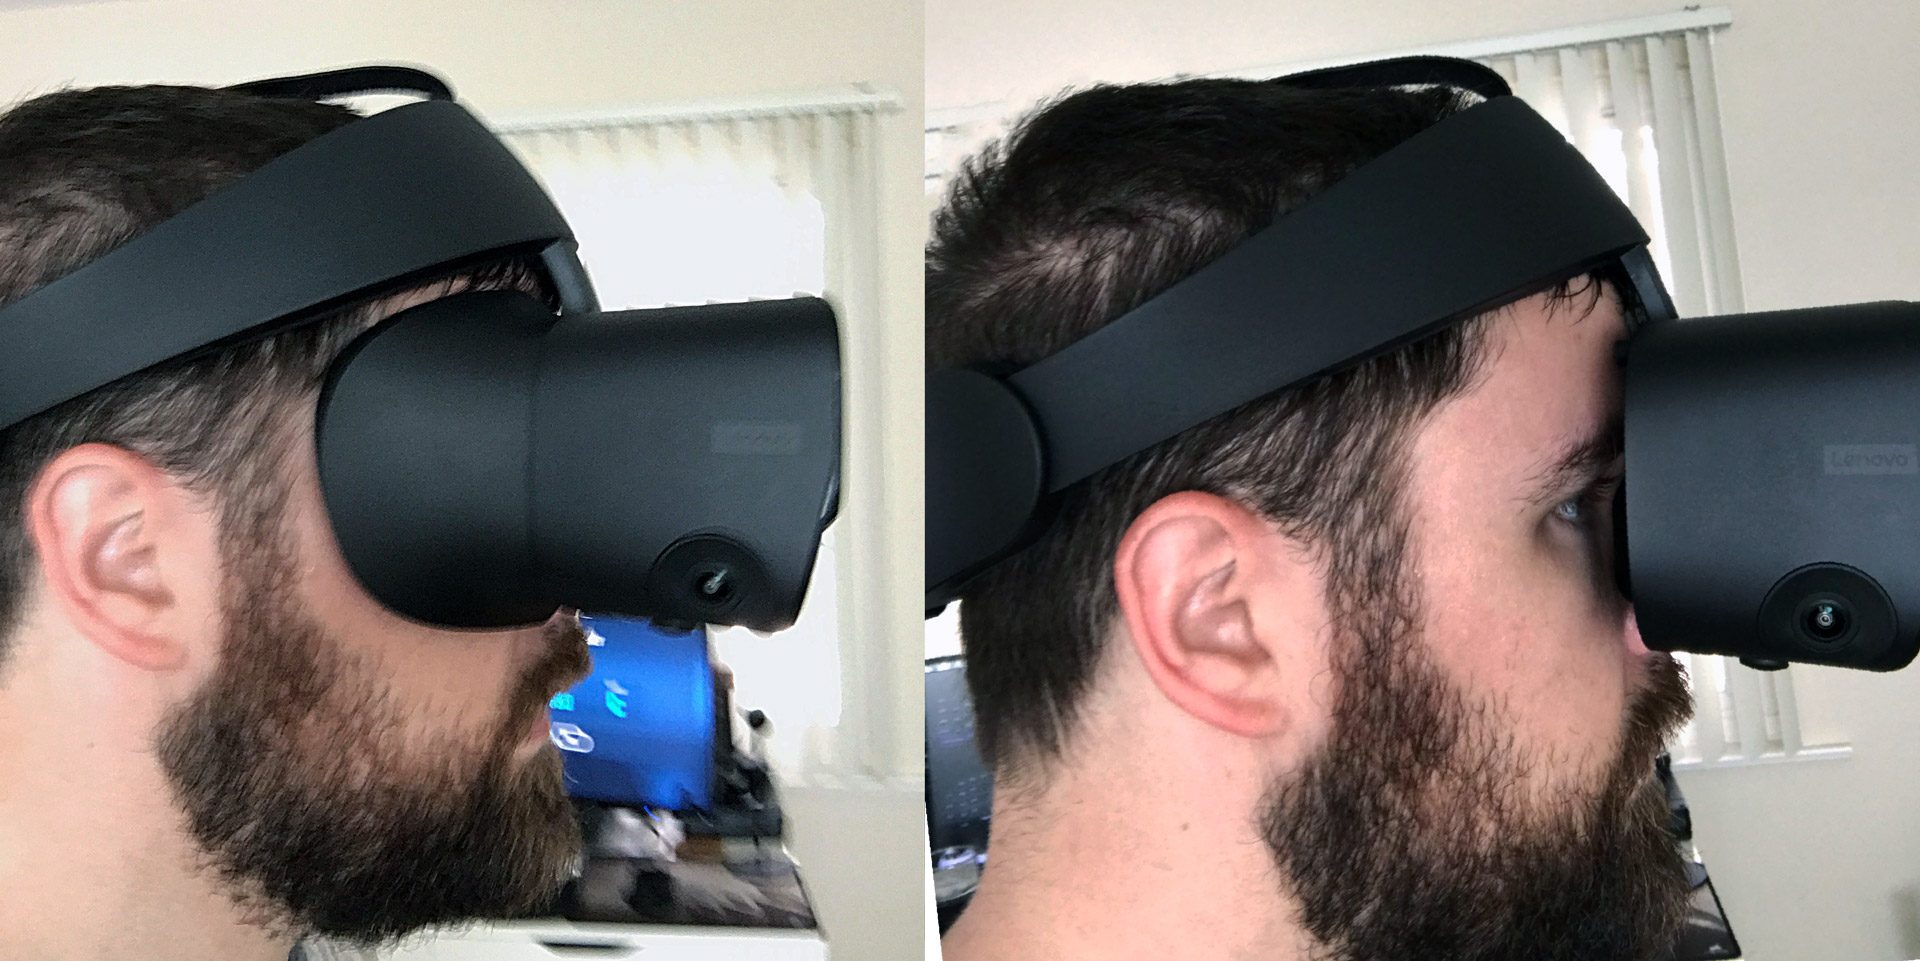 oculus rift s compared to oculus rift